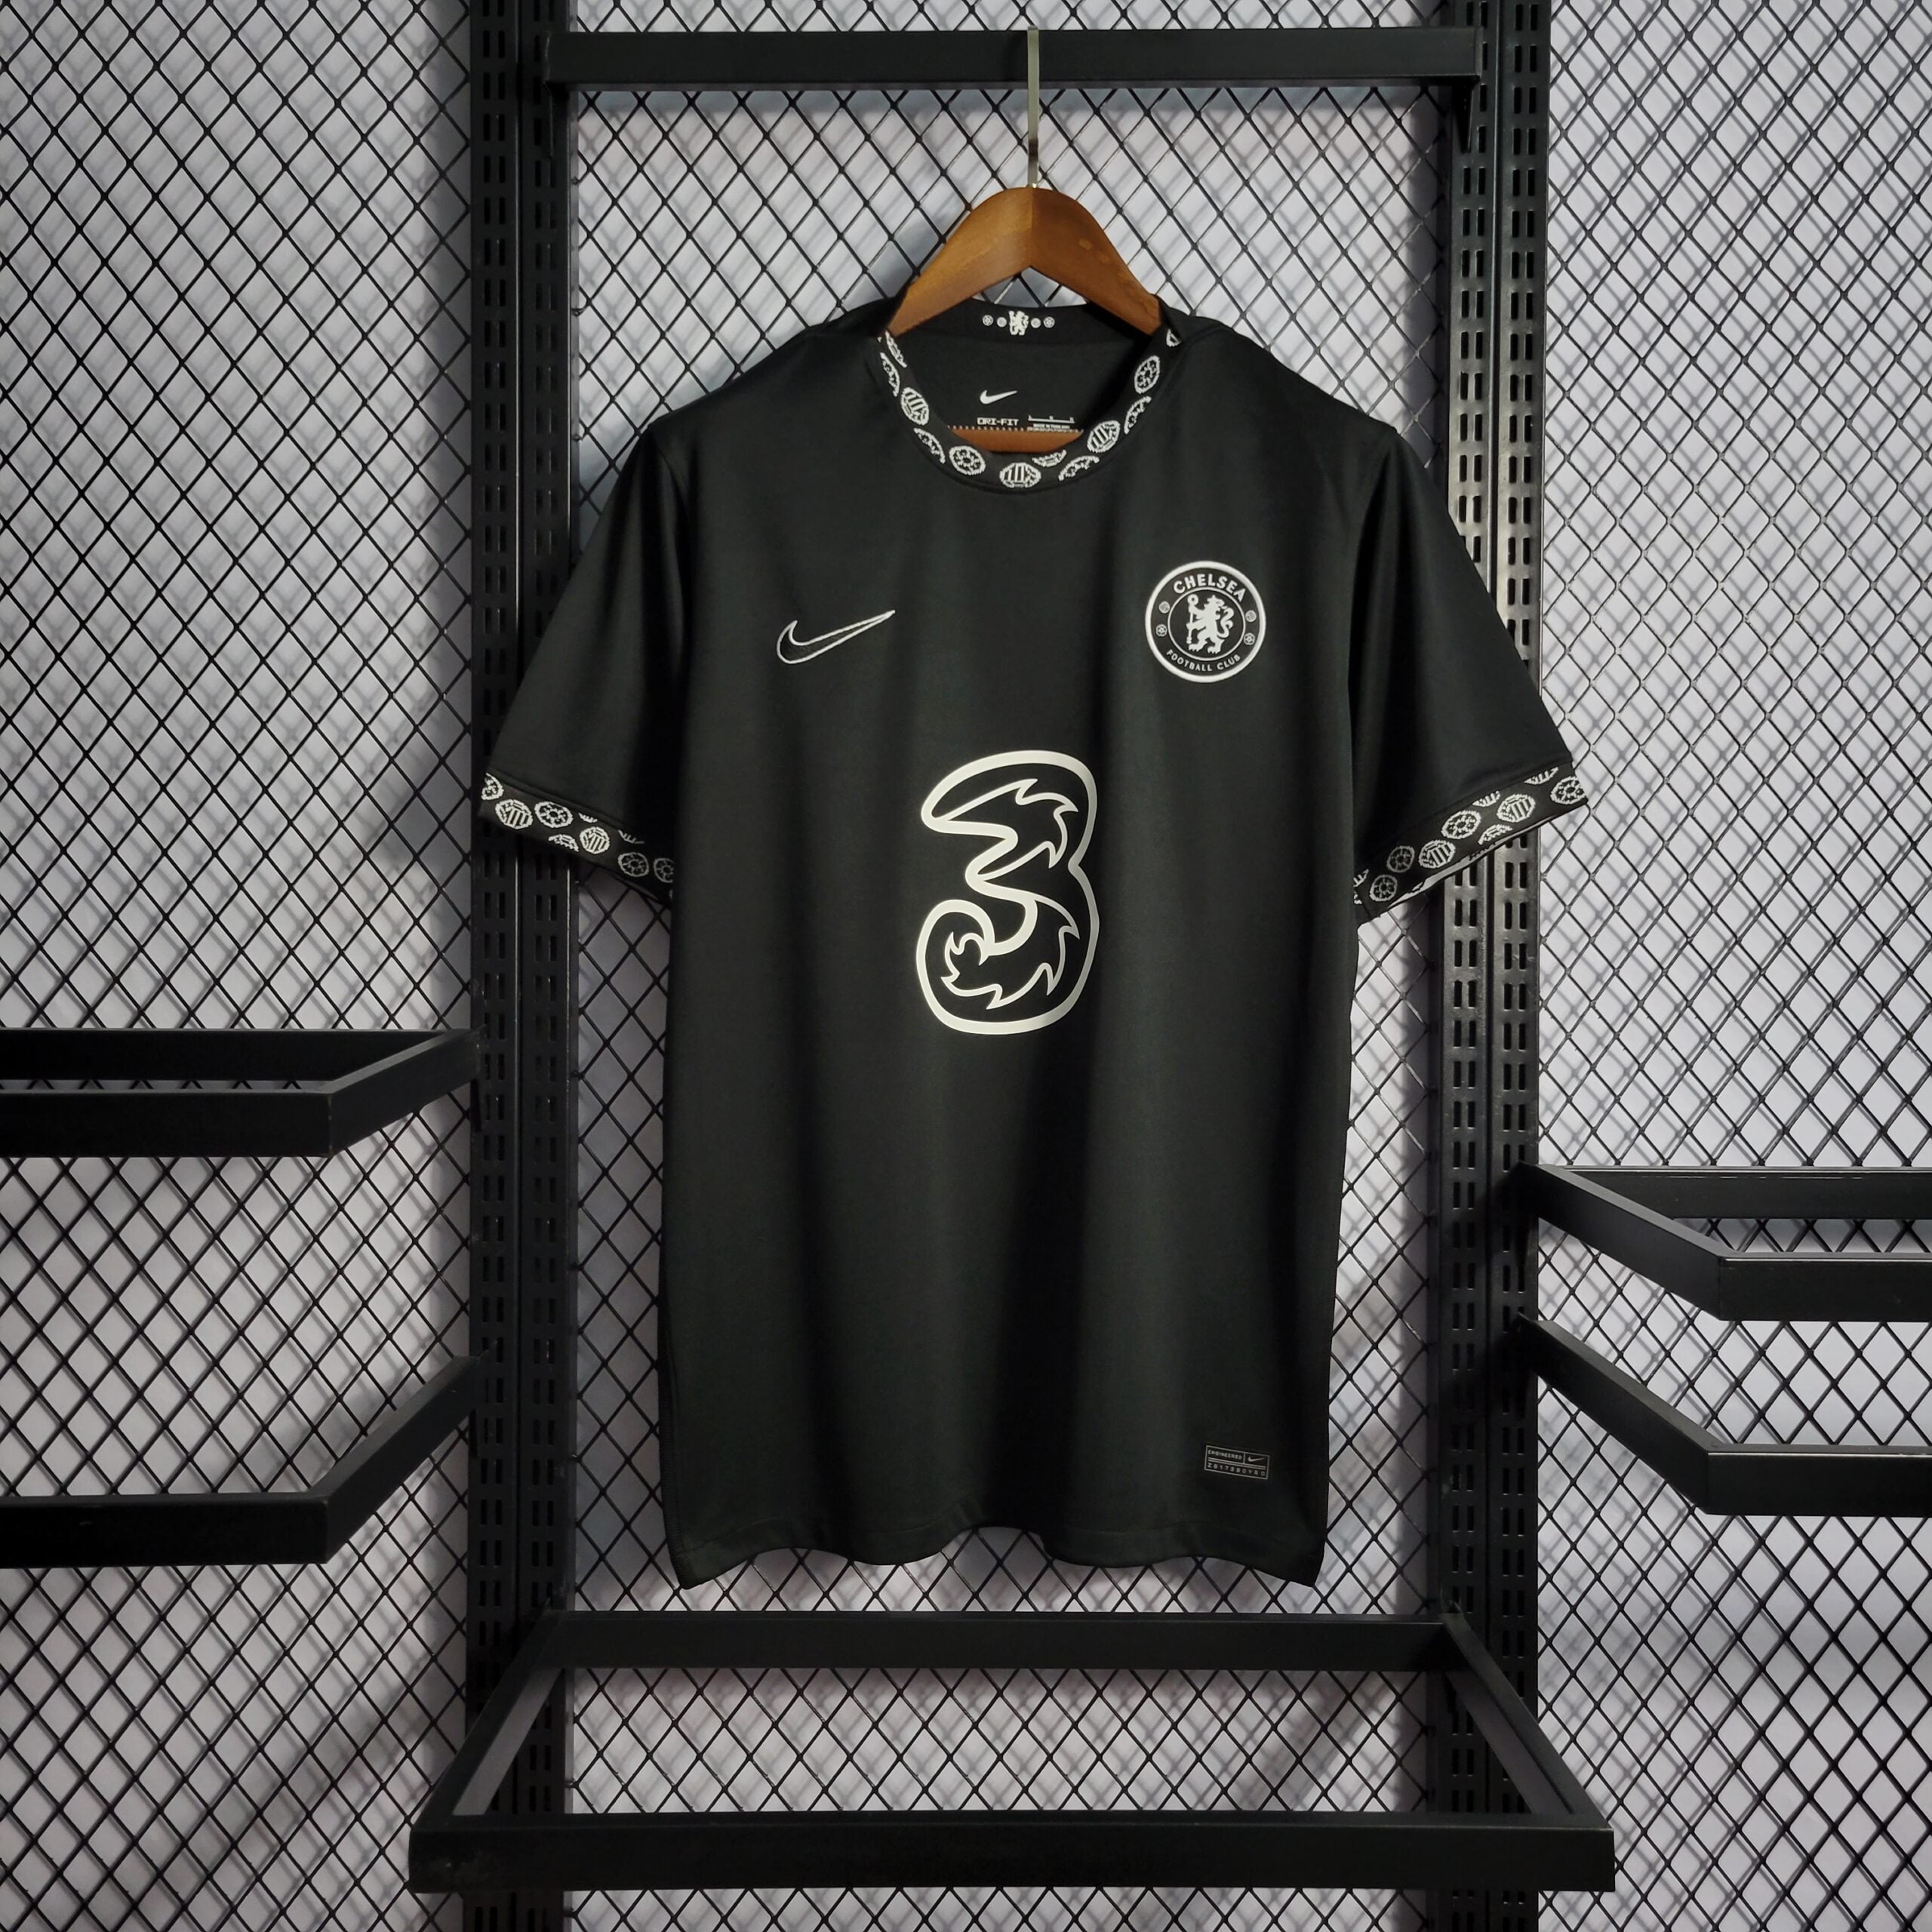 Chelsea Black Shirt Players Version 2022/2023